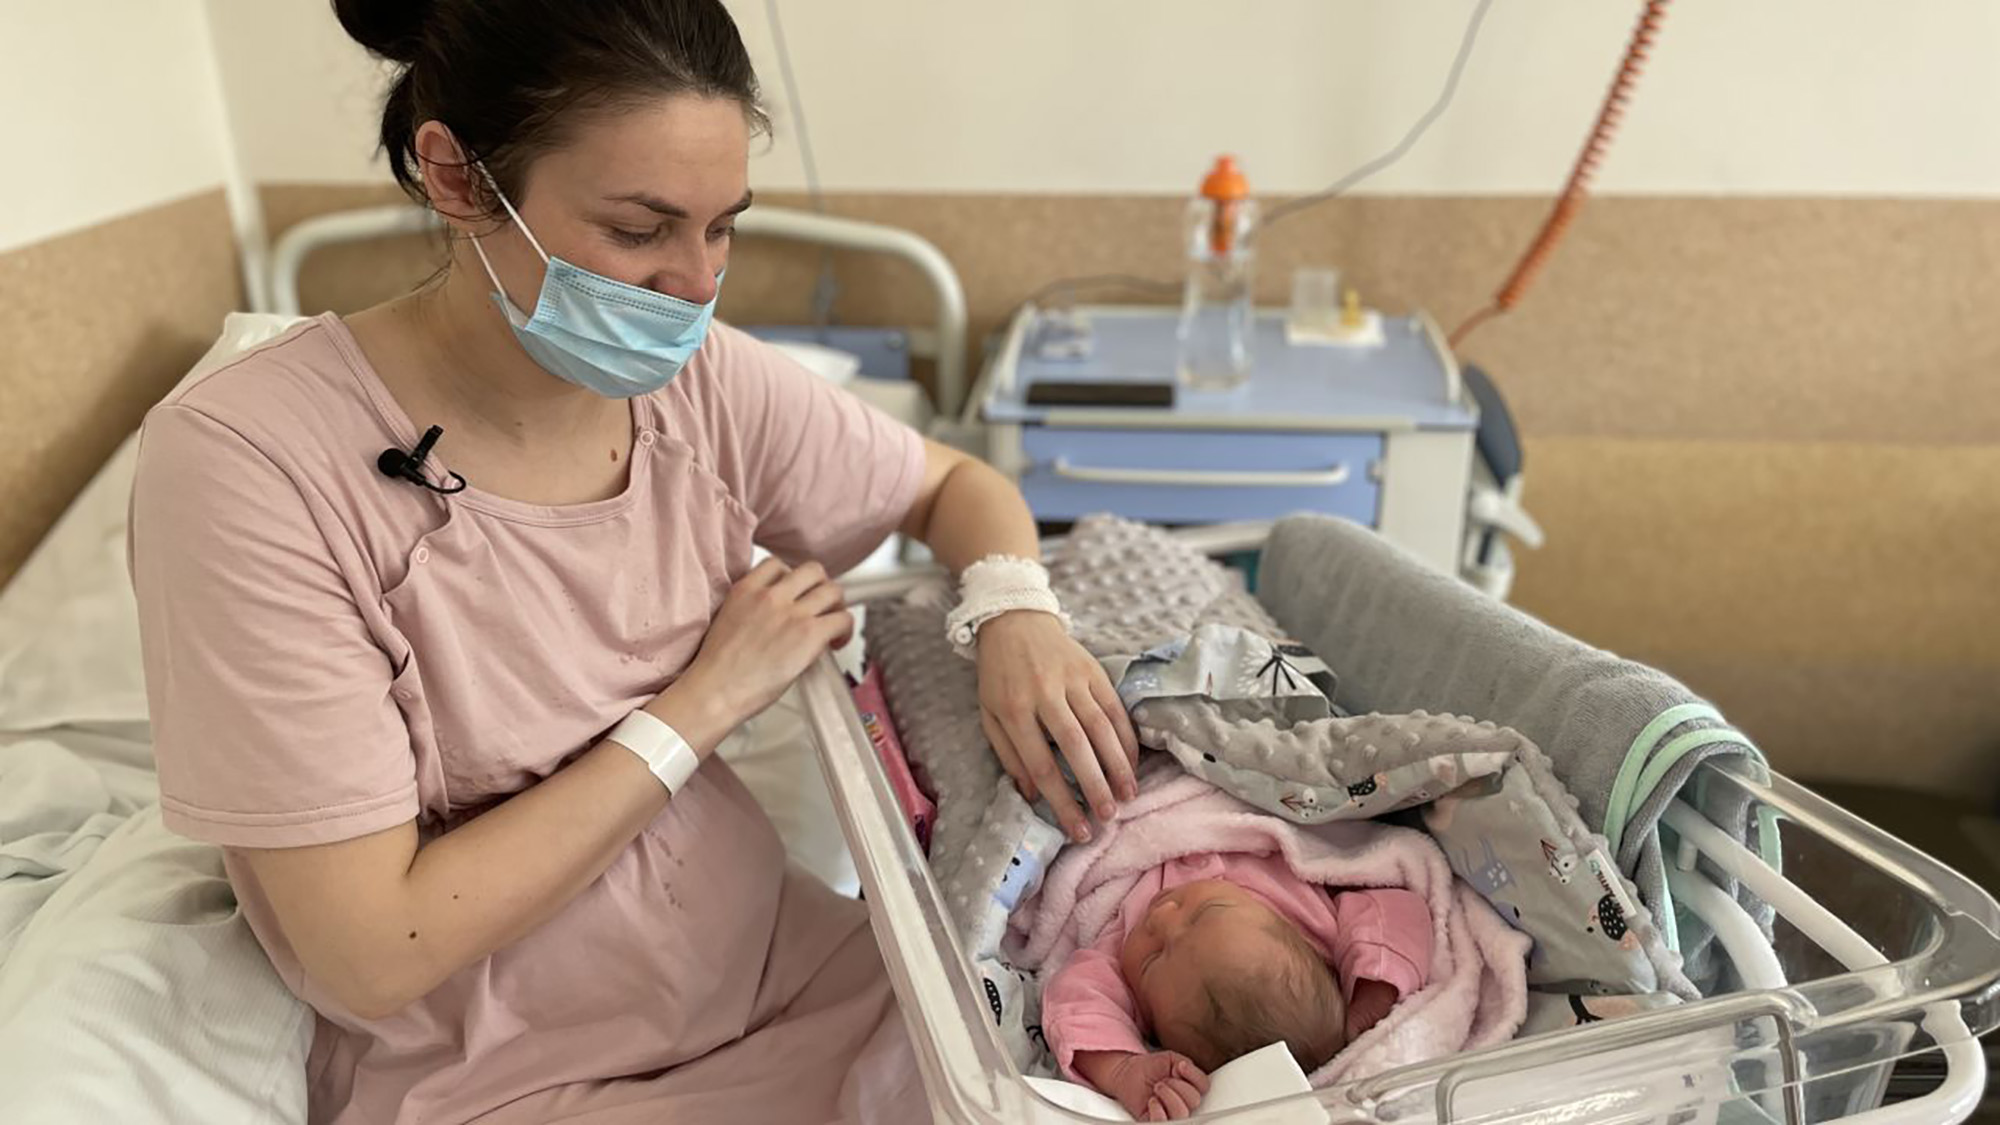 Khrystyna Pavluchenko takes care of her newborn daughter Adelina.